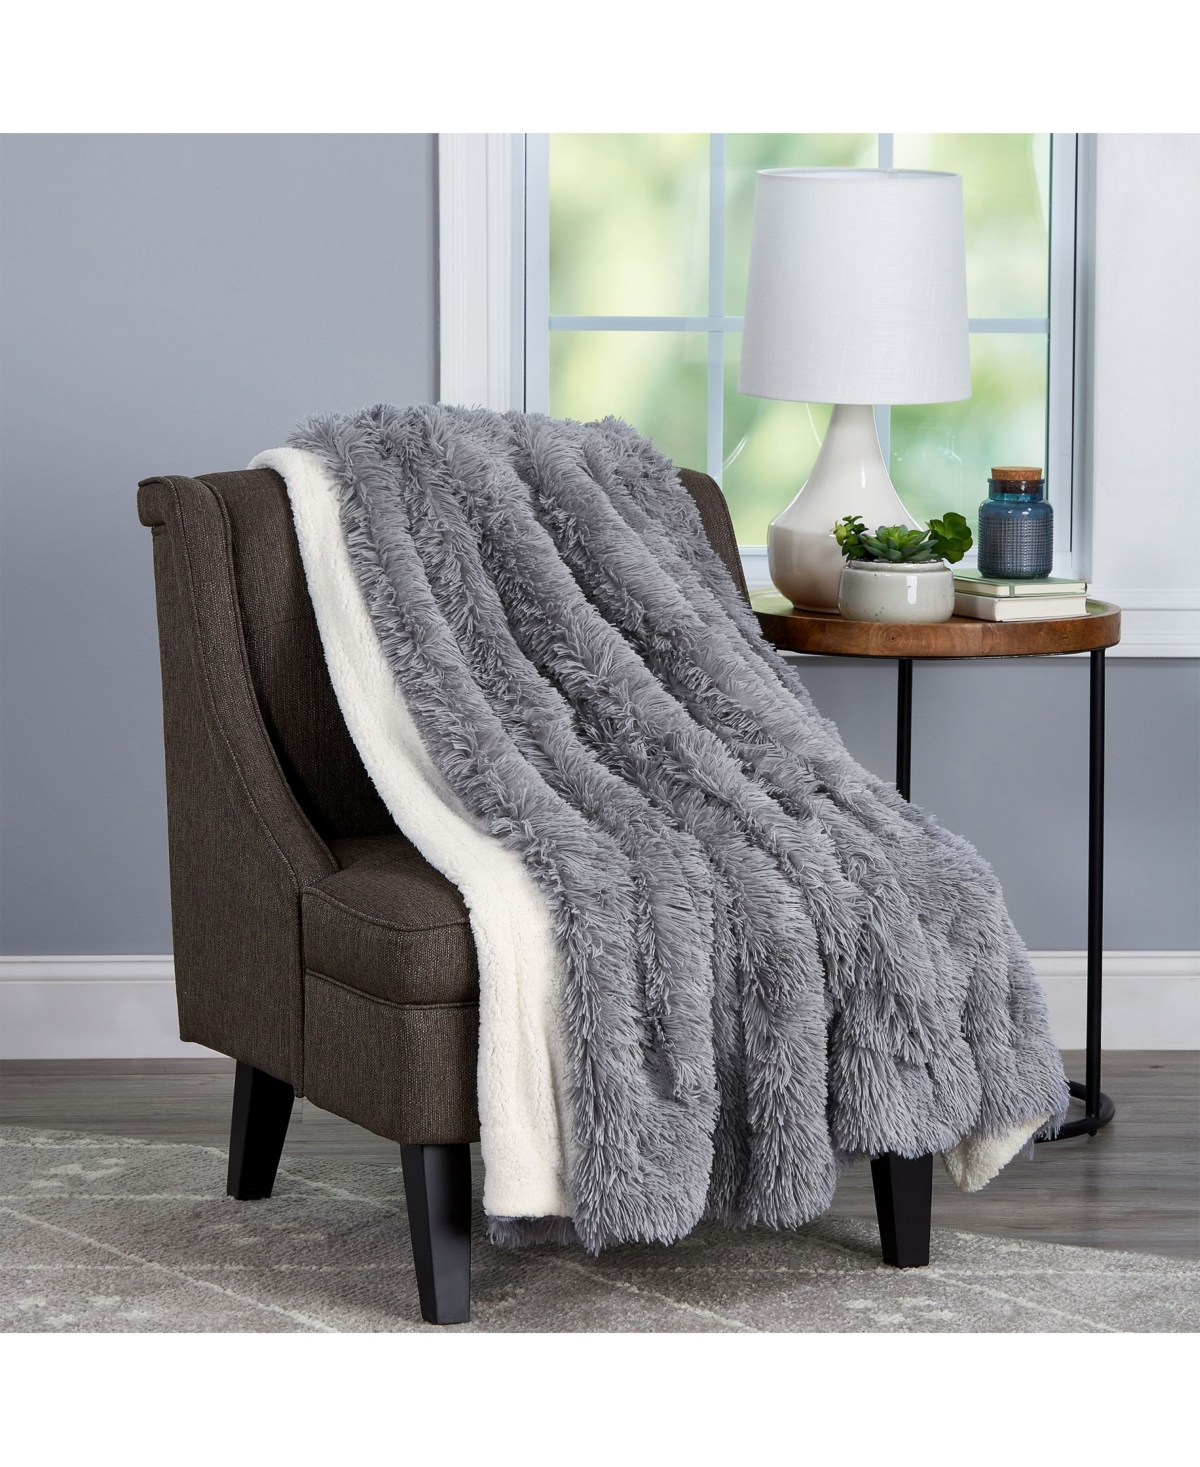 Baldwin Home Oversized Soft Fluffy Vintage-Look Throw Blanket